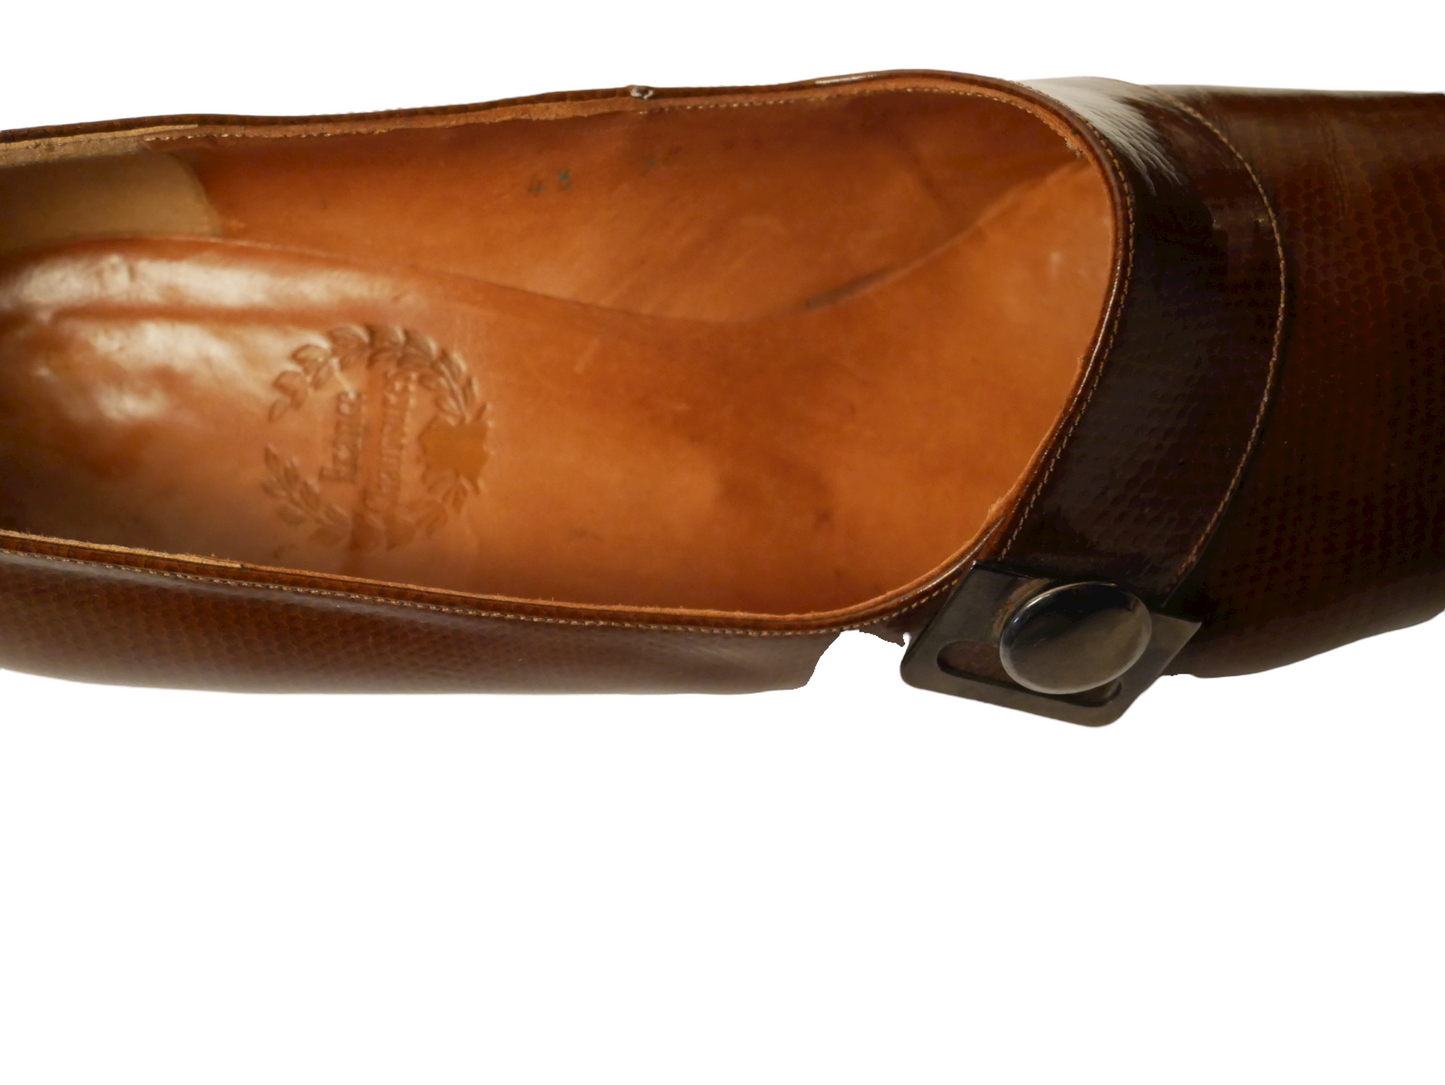 Vintage moccasins with caramel leather heel - 39 - 1980s